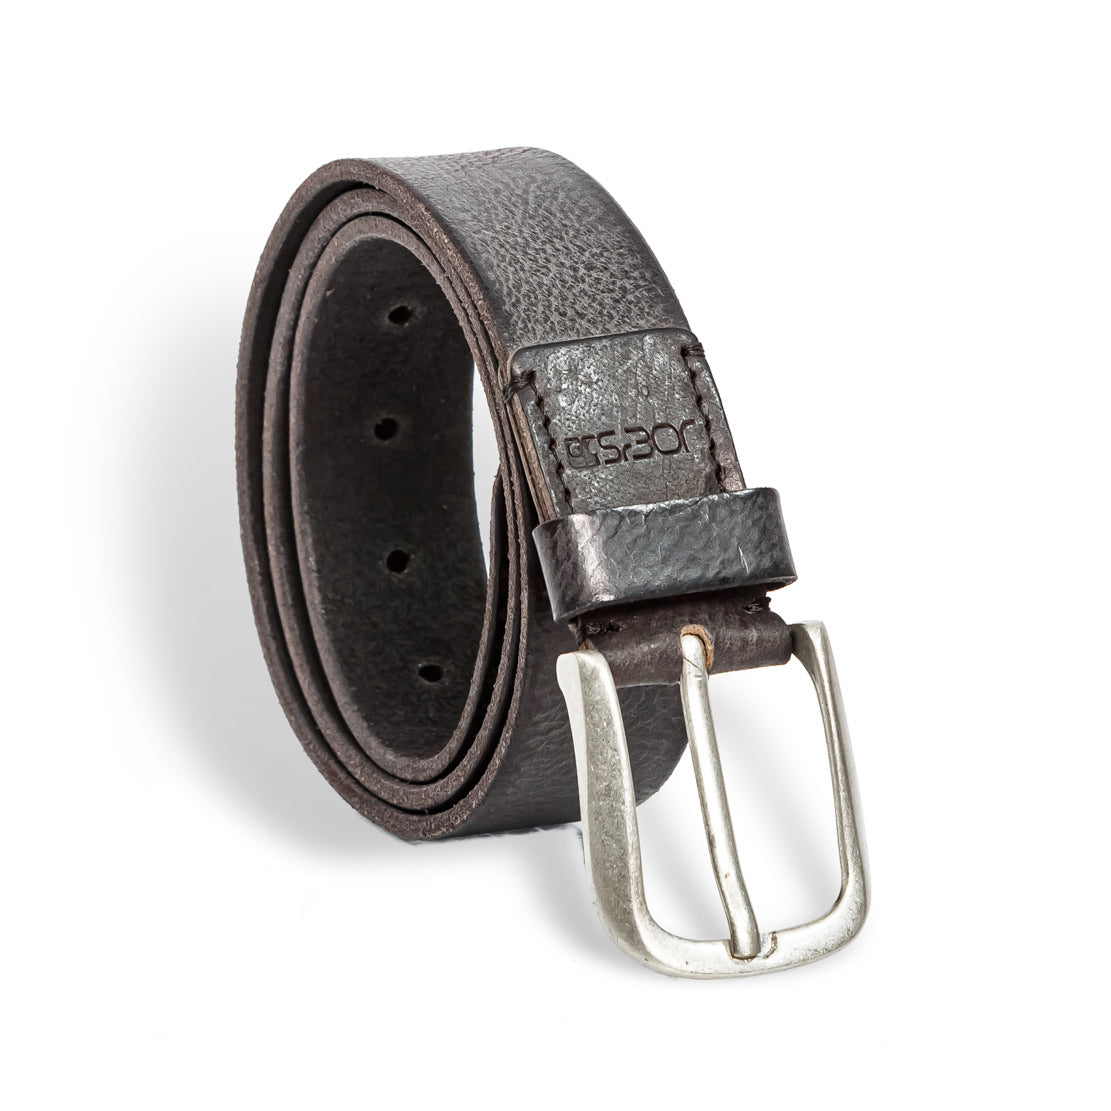 ‘Auburn’ Genuine Leather Belt